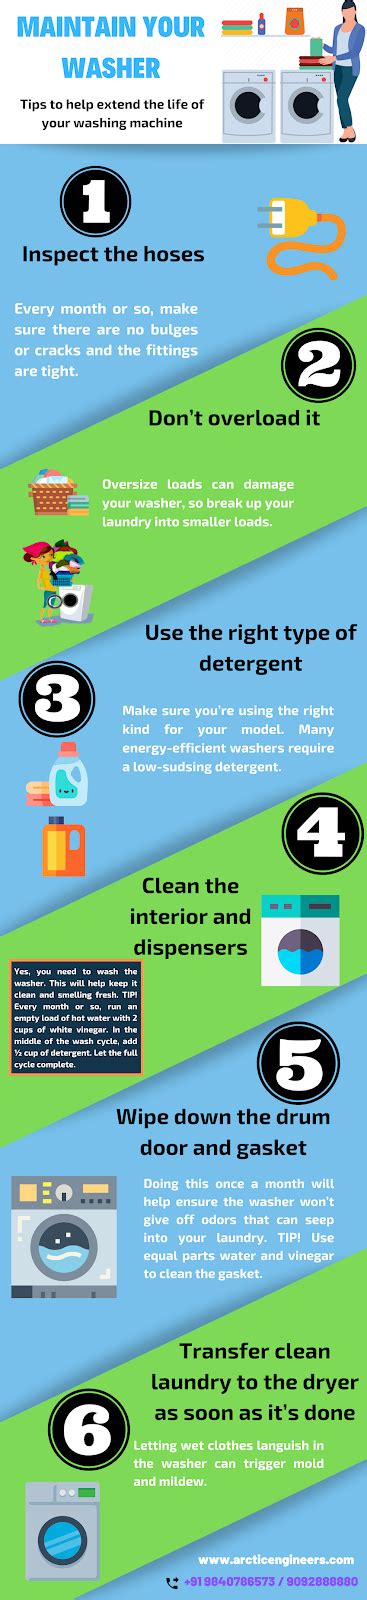 Services And Maintenance Washing Machine Maintenance Tips